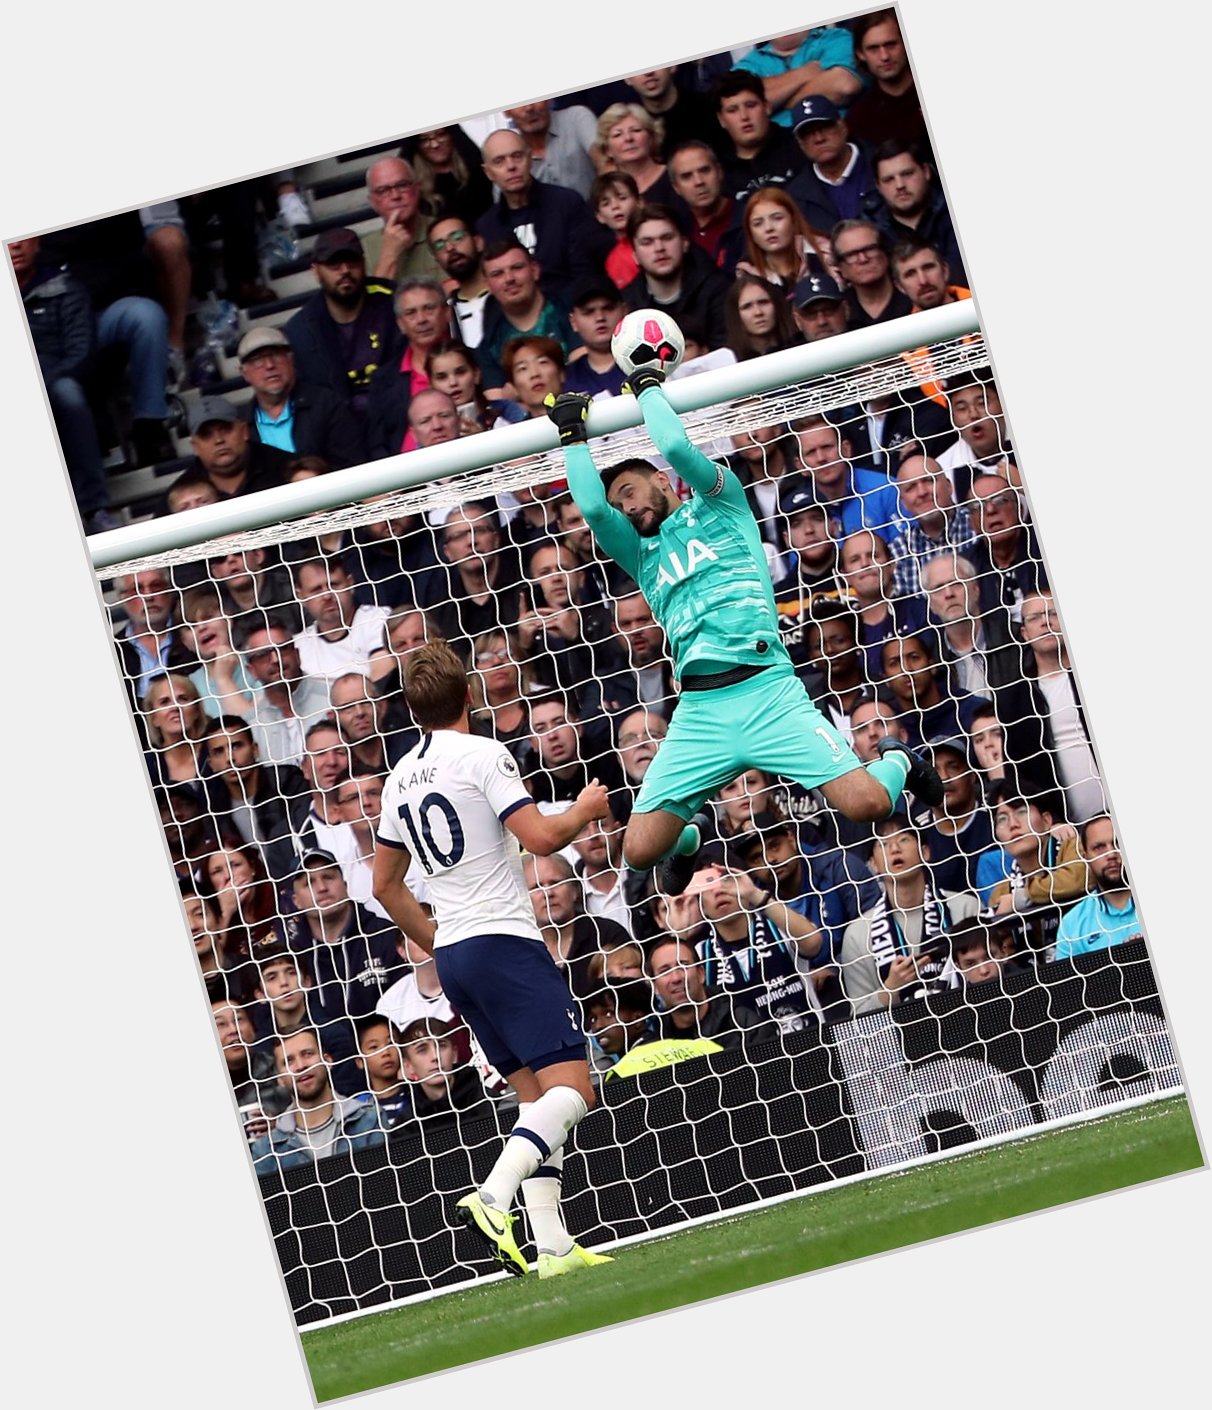 Tottenham\s France international goalkeeper Hugo Lloris is 33 today. Happy birthday and get well soon Hugo! 